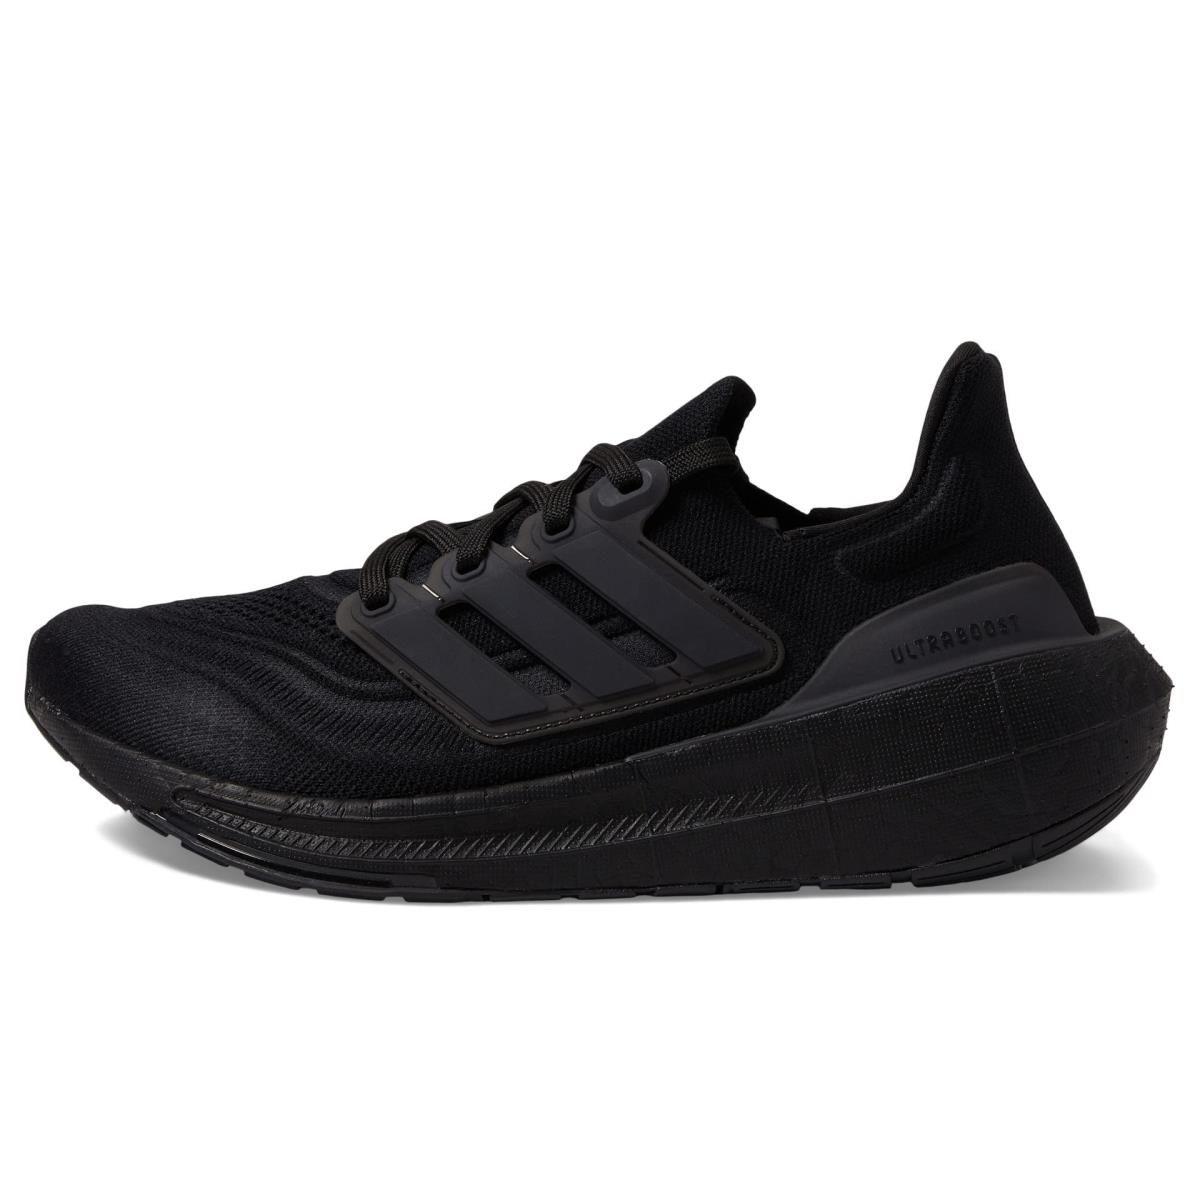 Adidas Women`s Ultraboost Light Running Shoes Snea Black/Black/Black